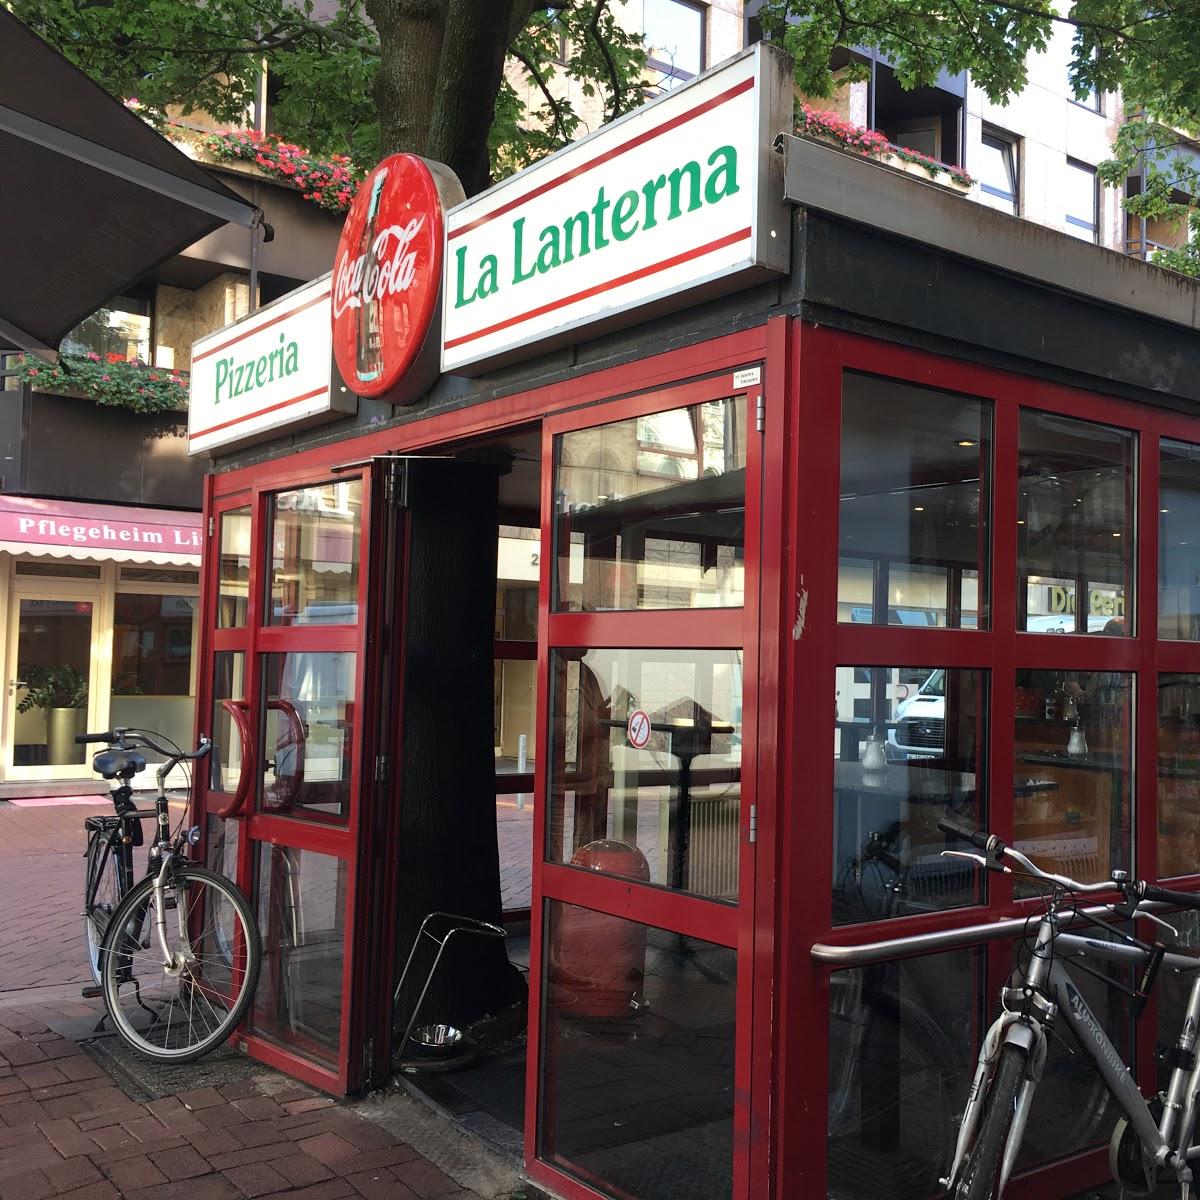 Restaurant "Pizzeria La Lanterna" in Hannover